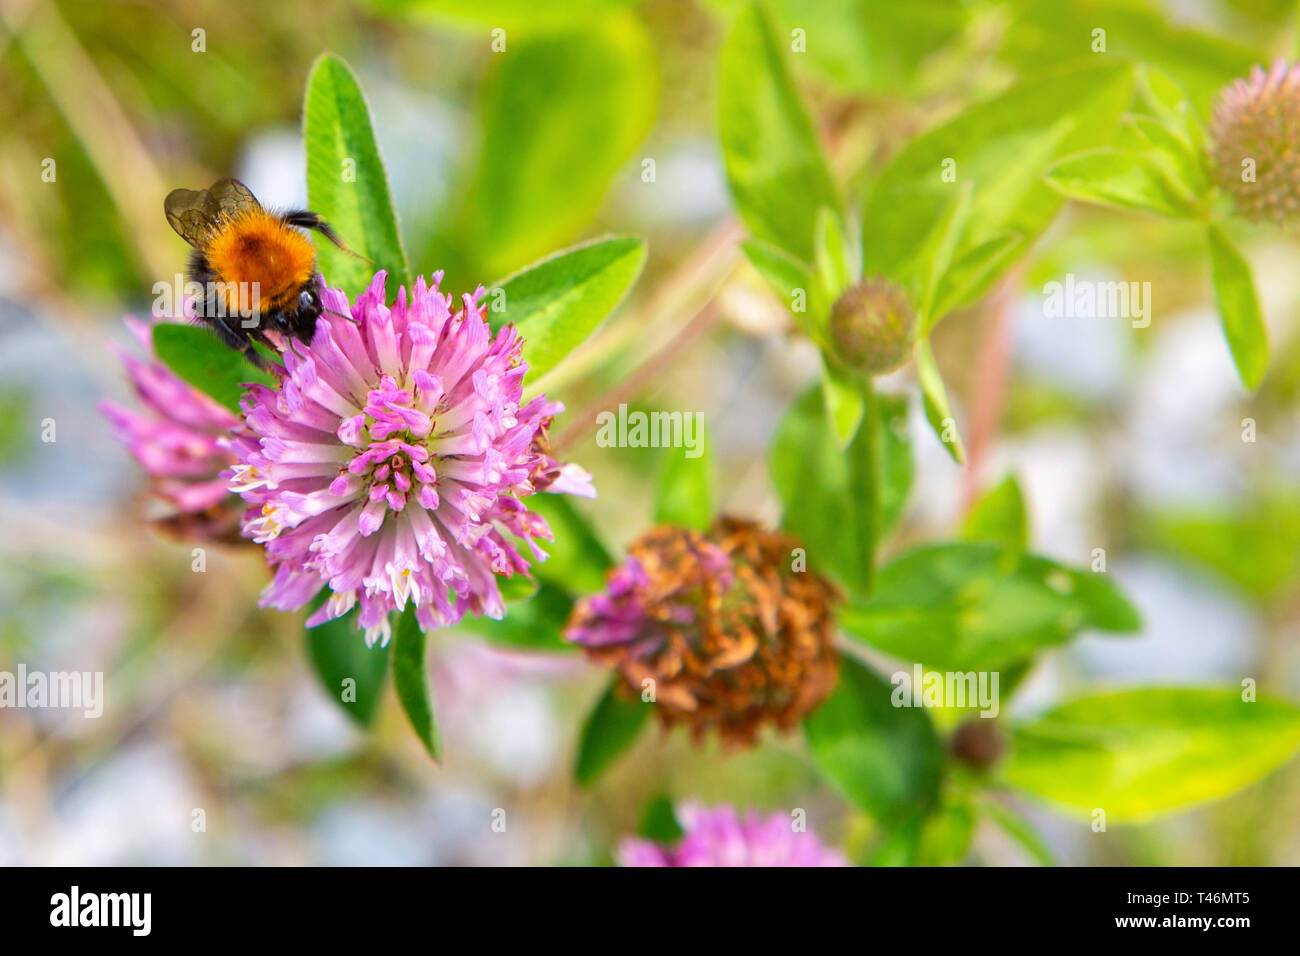 Bumblebee on hop flower,close up. Details of a bumblebee on a wild flowers. Bumble bee collecting pollen on pink flower. Closeup of garden bumblebee. Stock Photo